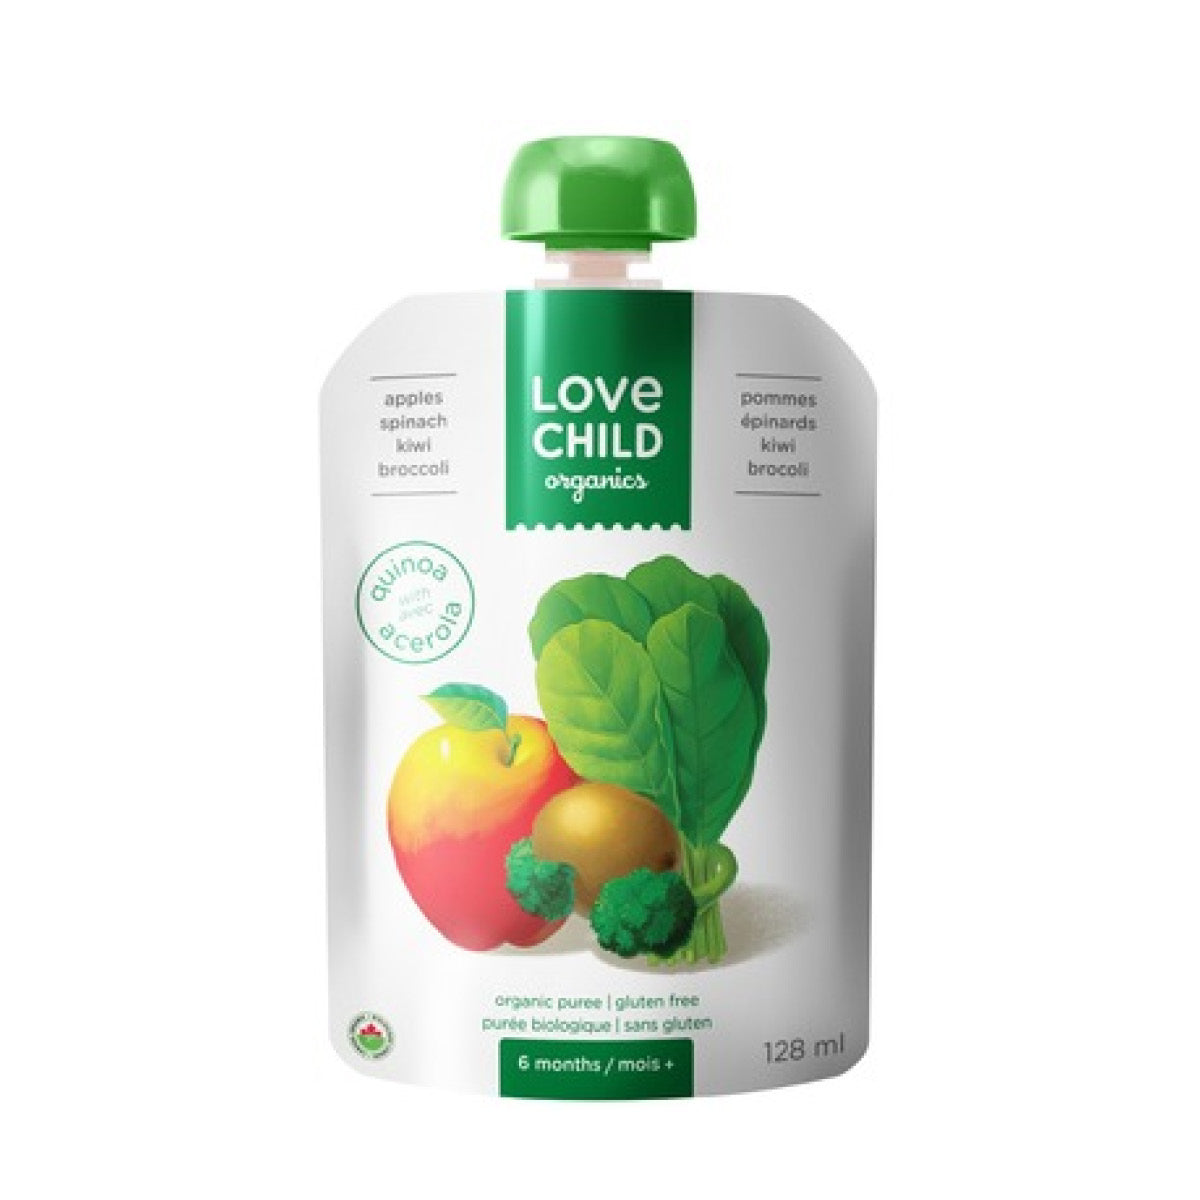 Love Child Organics Baby Food, Apple/Spinach/Kiwi/Broccoli, 128ml